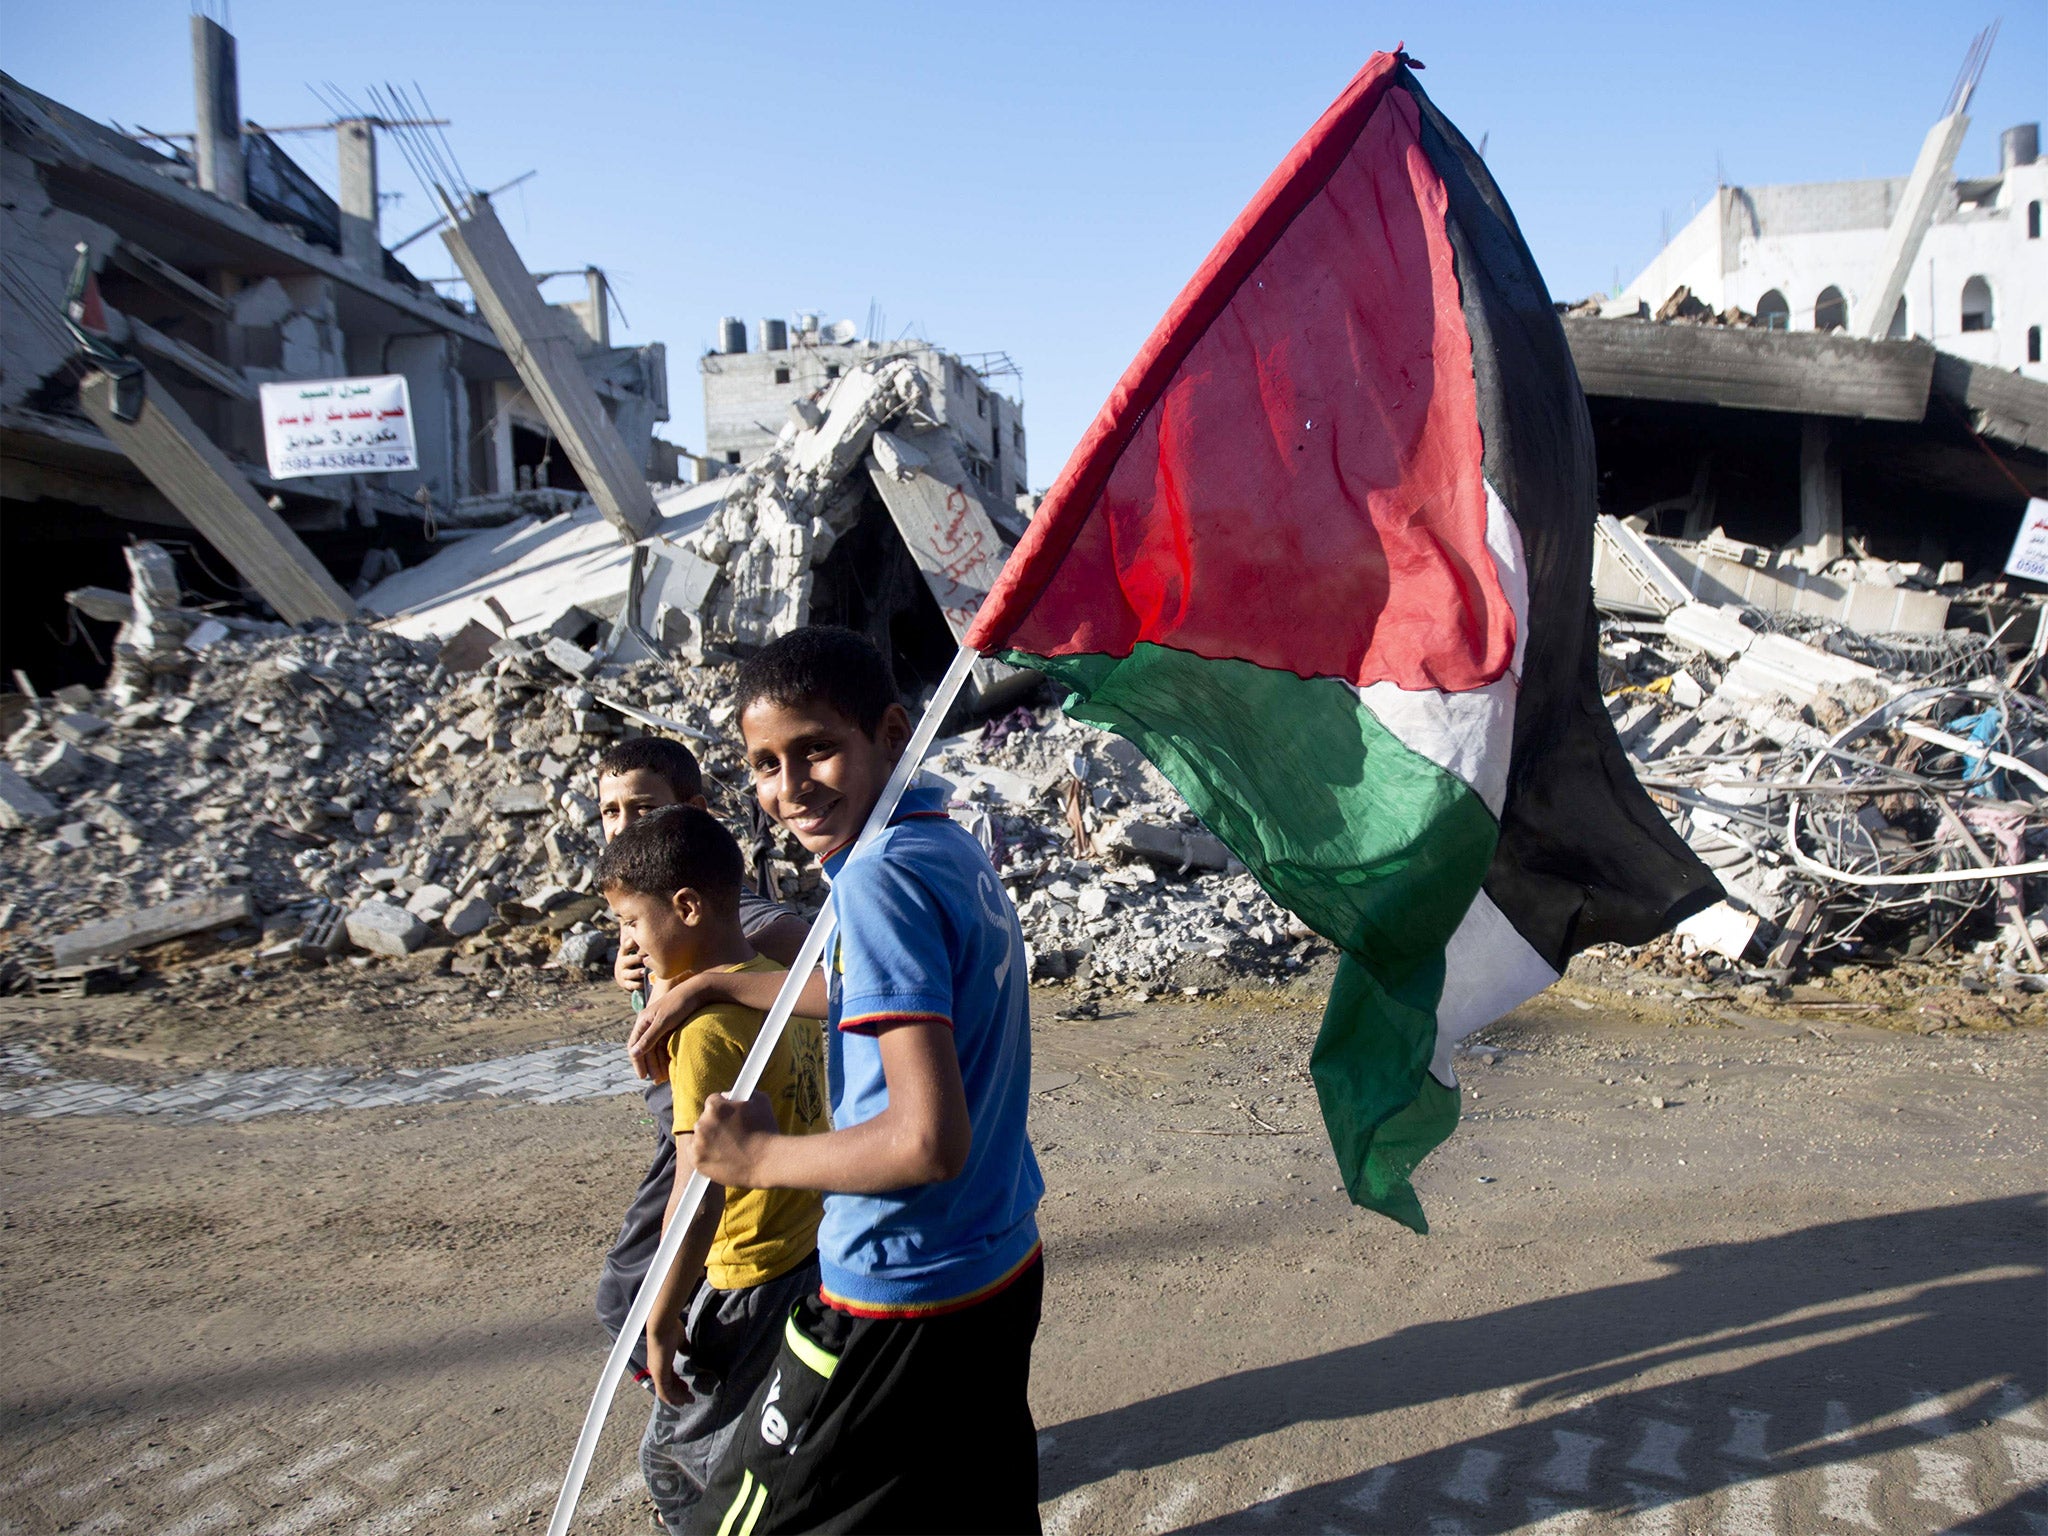 Palestinian children smile while walking through a scene of destruction